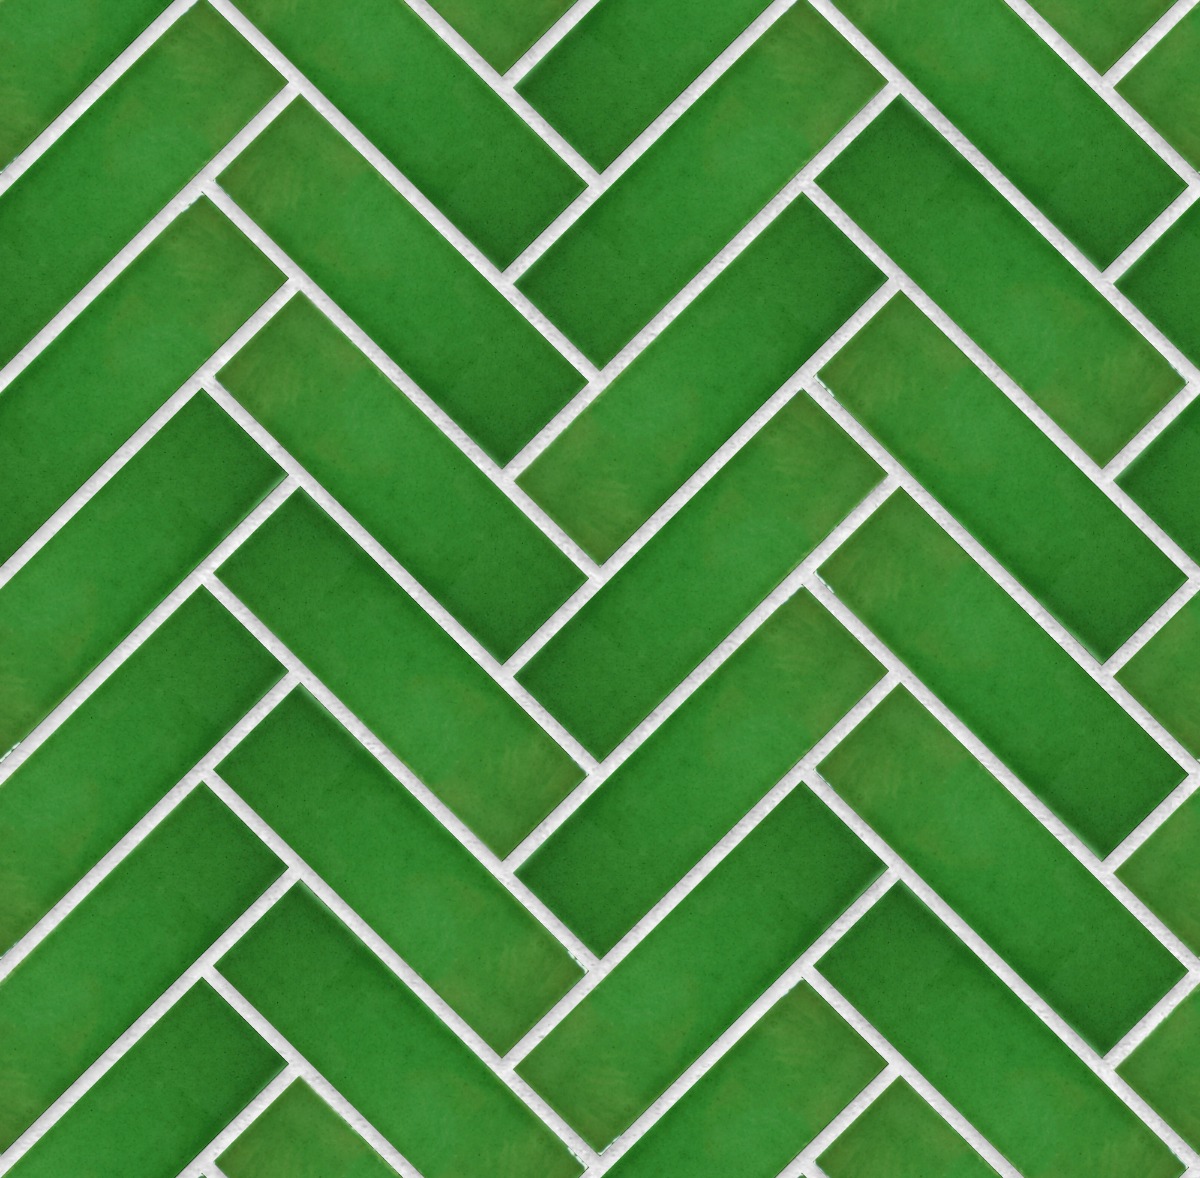 A seamless brick texture with eco-glazed brick slips cut grass units arranged in a Herringbone pattern